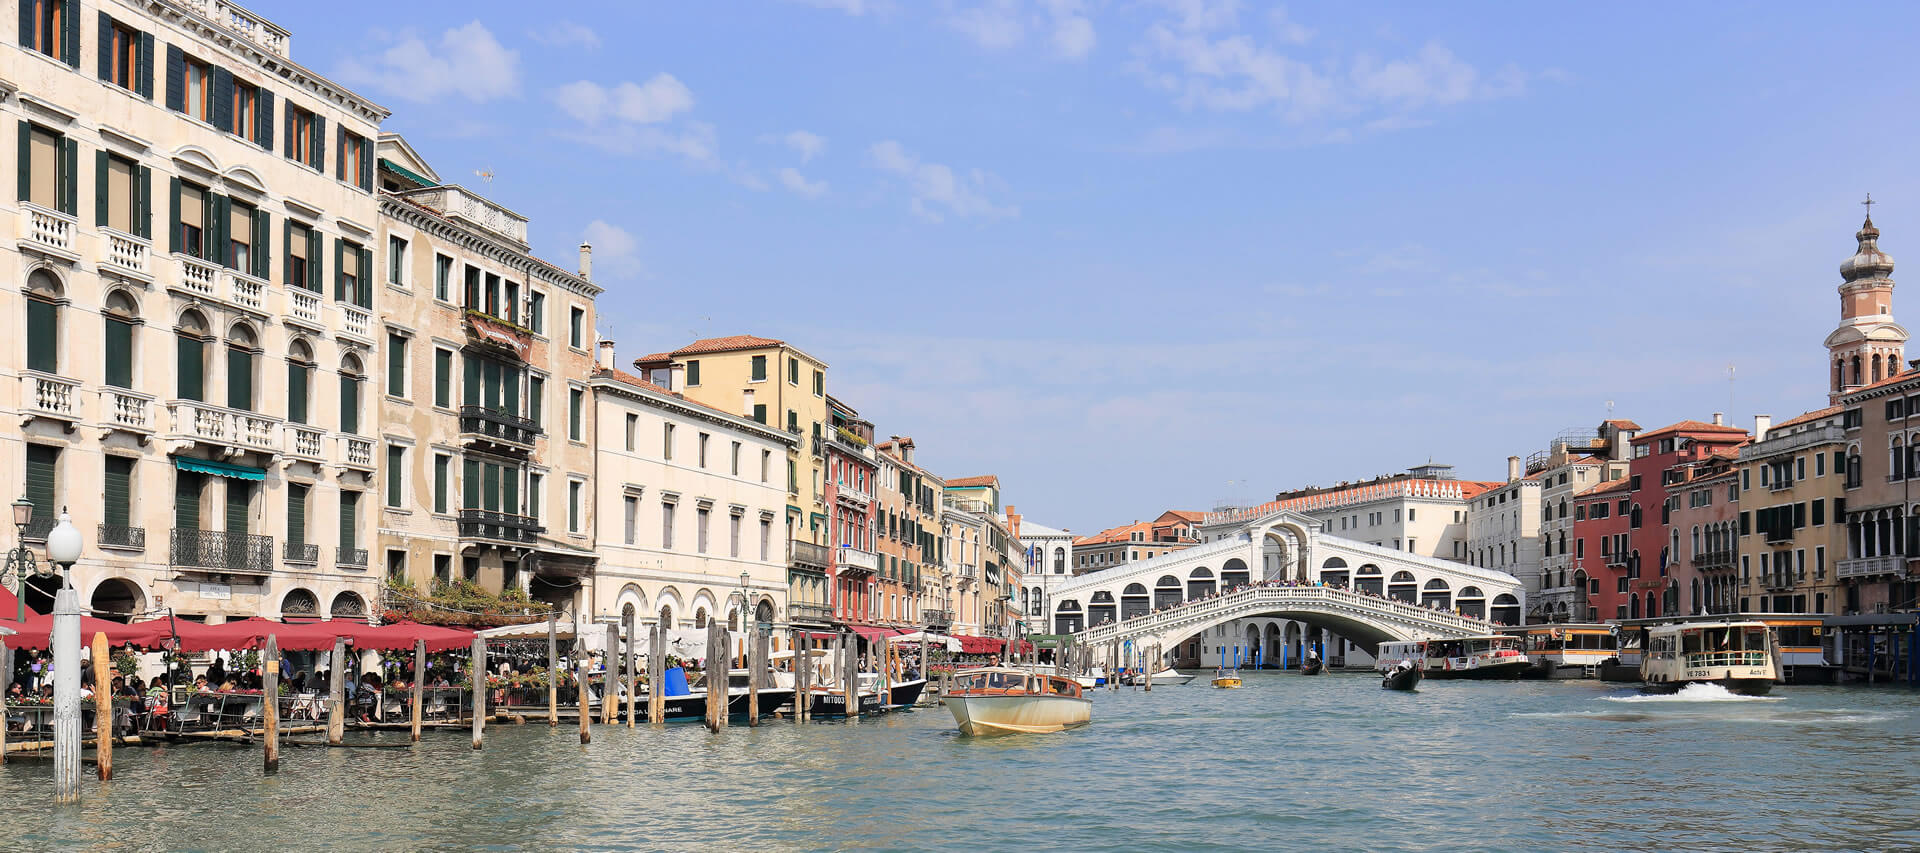 Rialto Köprüsü ile sonbaharda Venedik